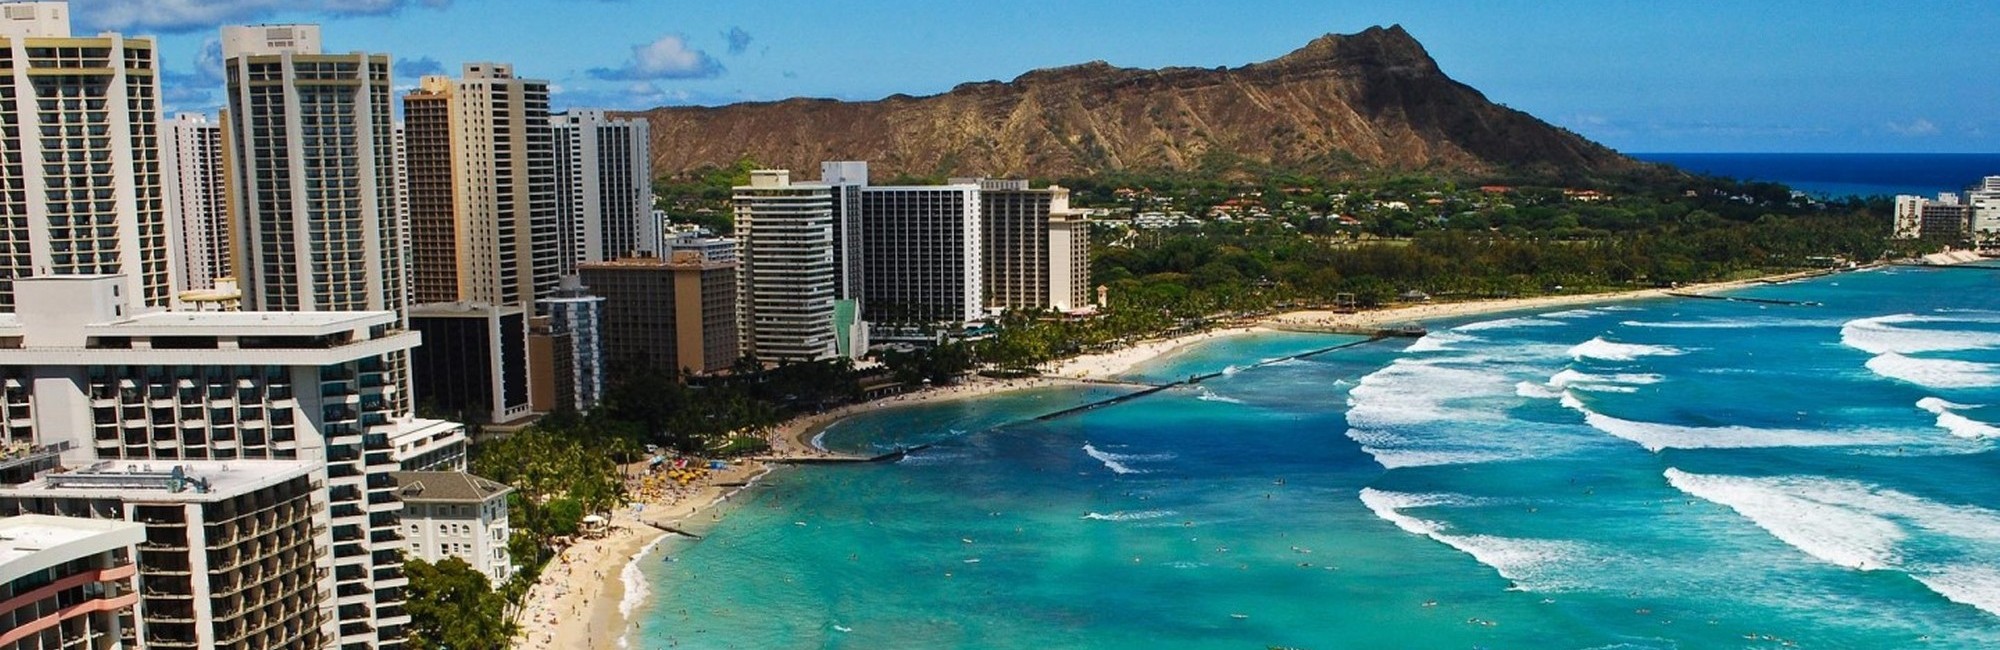 Waikiki Resort Properties in Honolulu, HI